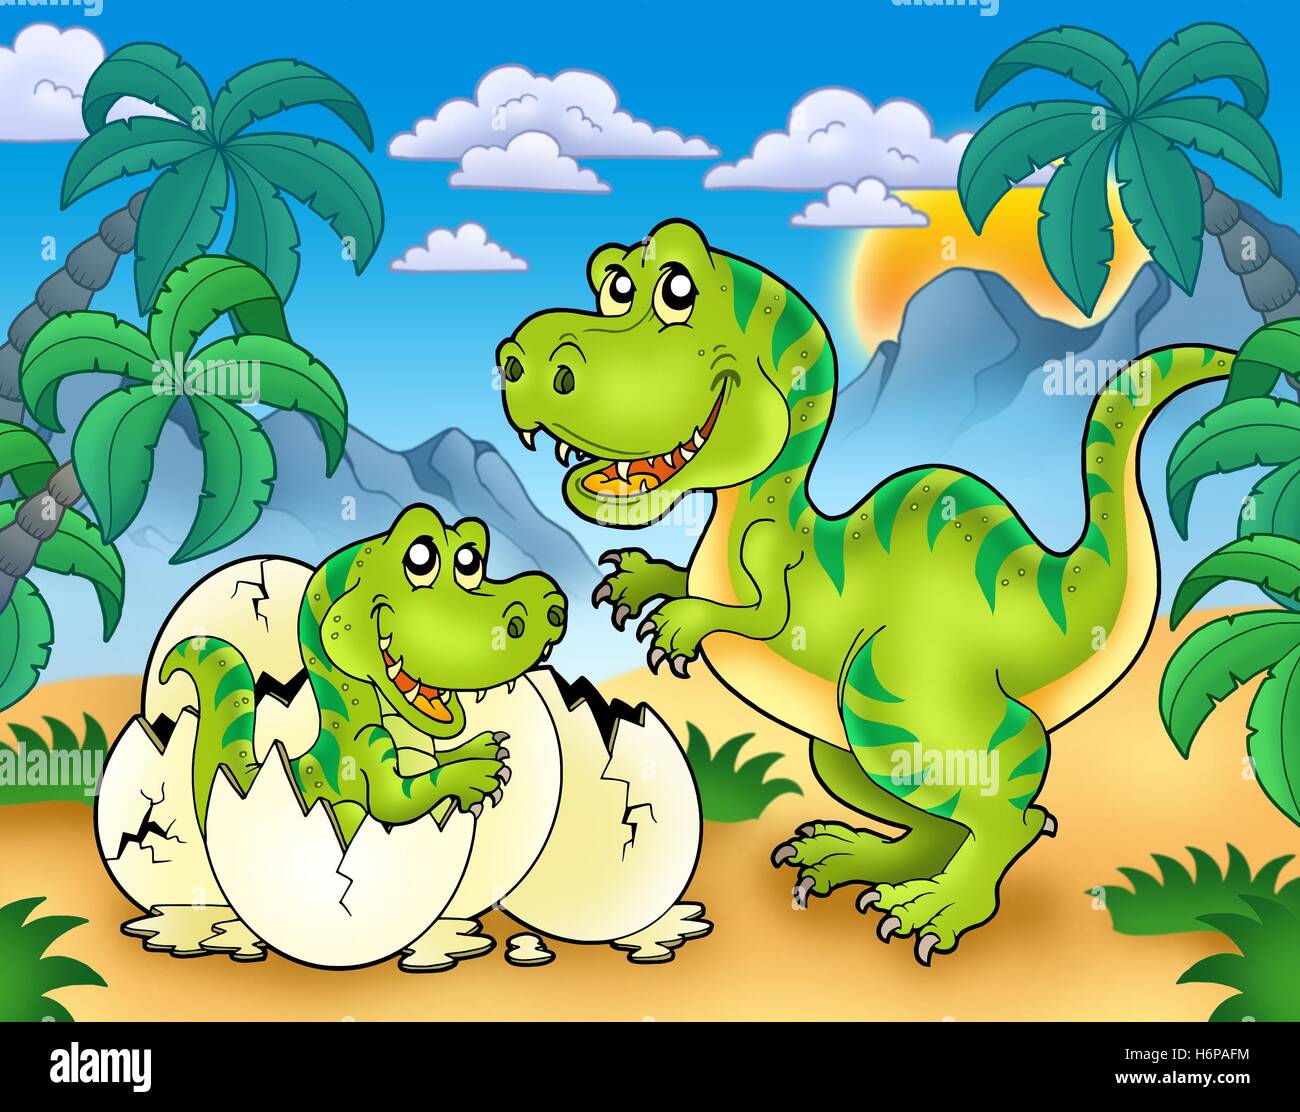 Dinosauro jurassic preistoria preistoria ridere risate ridere twit risatina sorriso sorridente risate laughingly sorridendo sorrisi Foto Stock